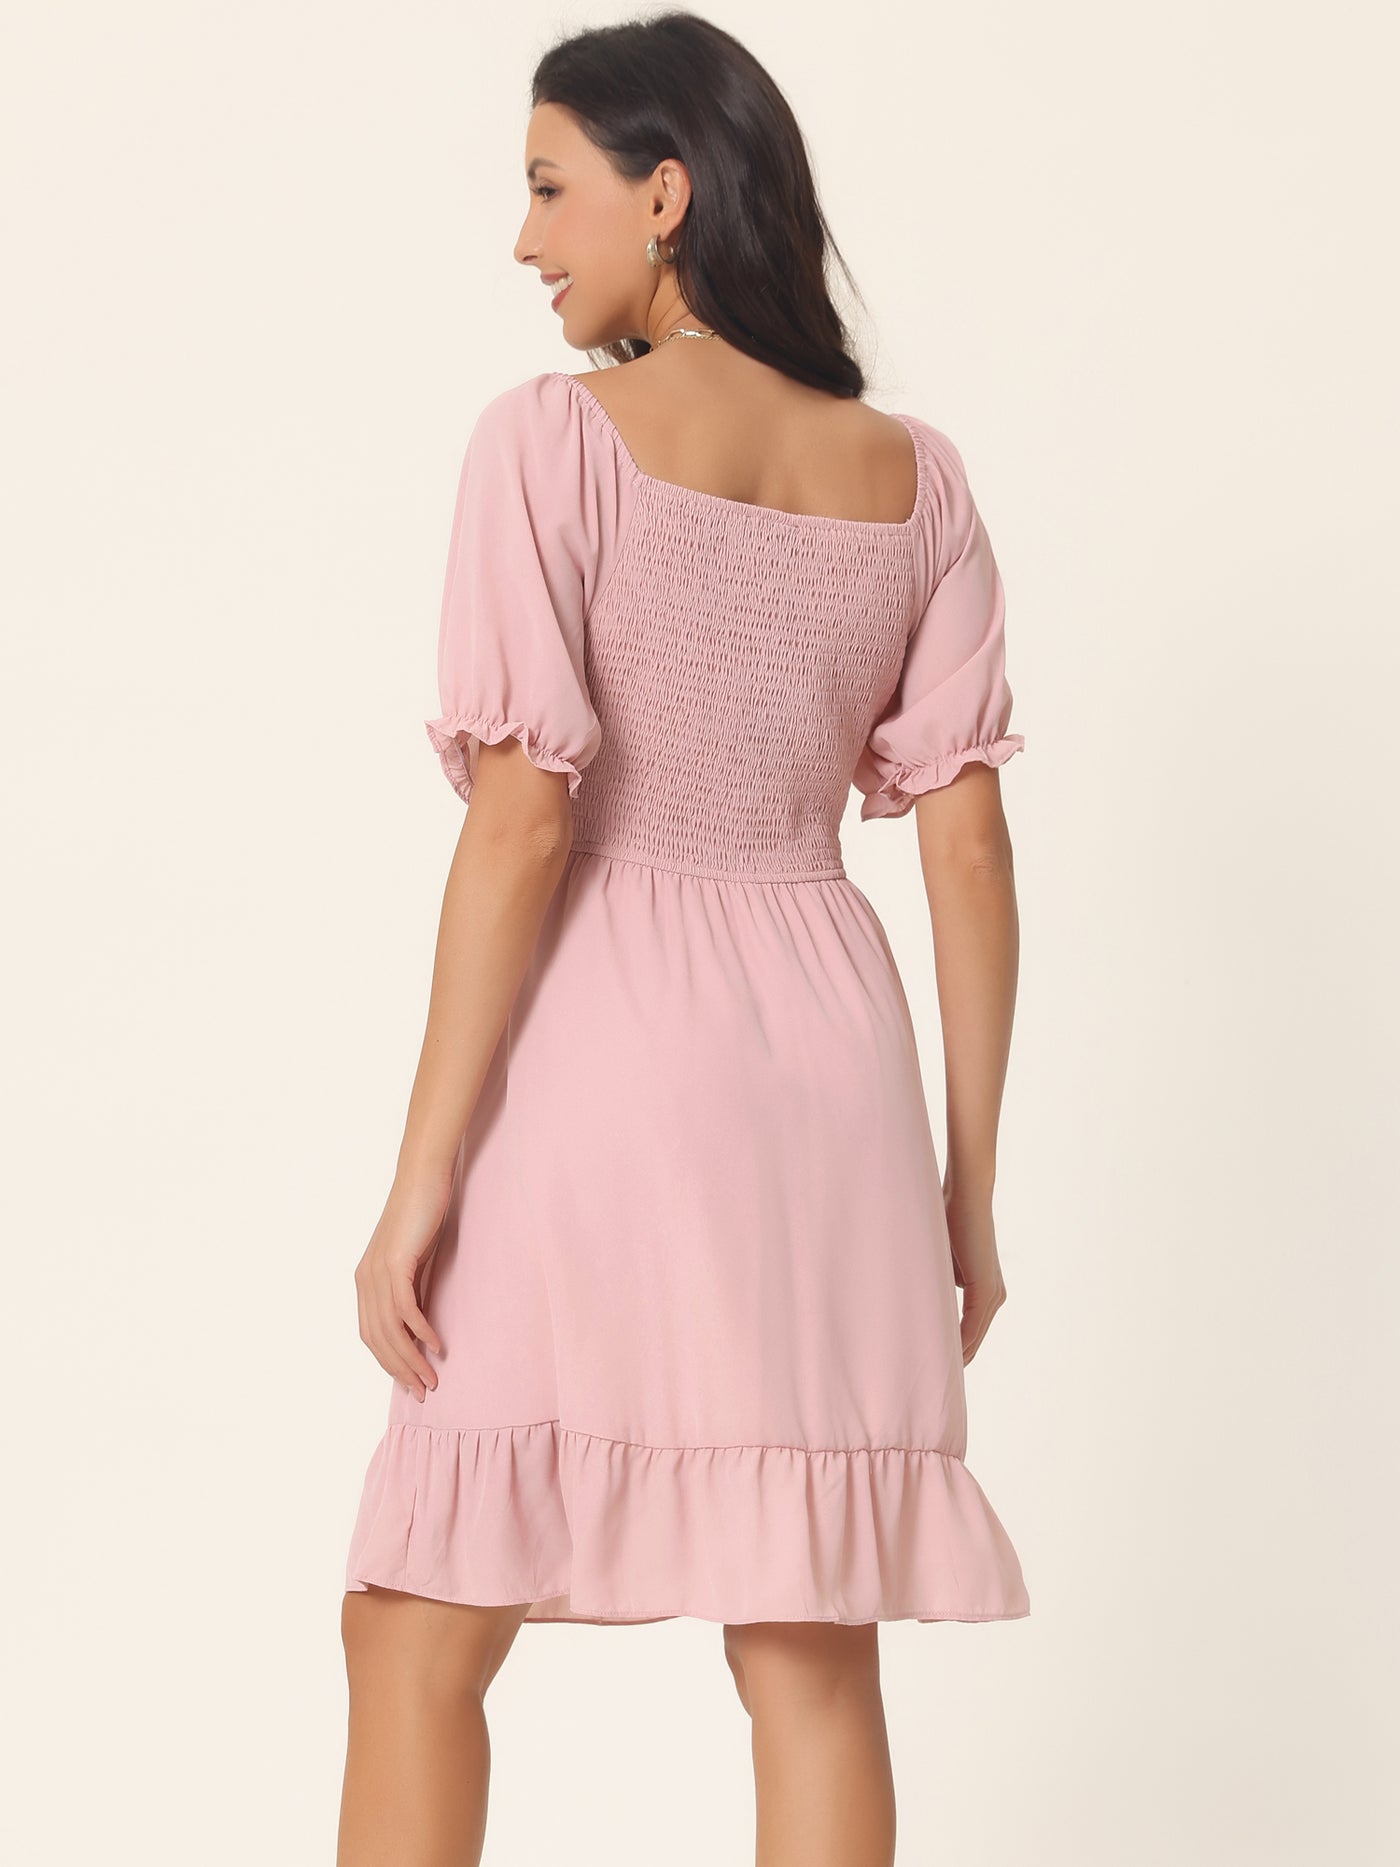 Bublédon Women's Summer Dresses Square Neck Puff Short Sleeve Smocked Back Ruffle A-Line Casual Mini Dress